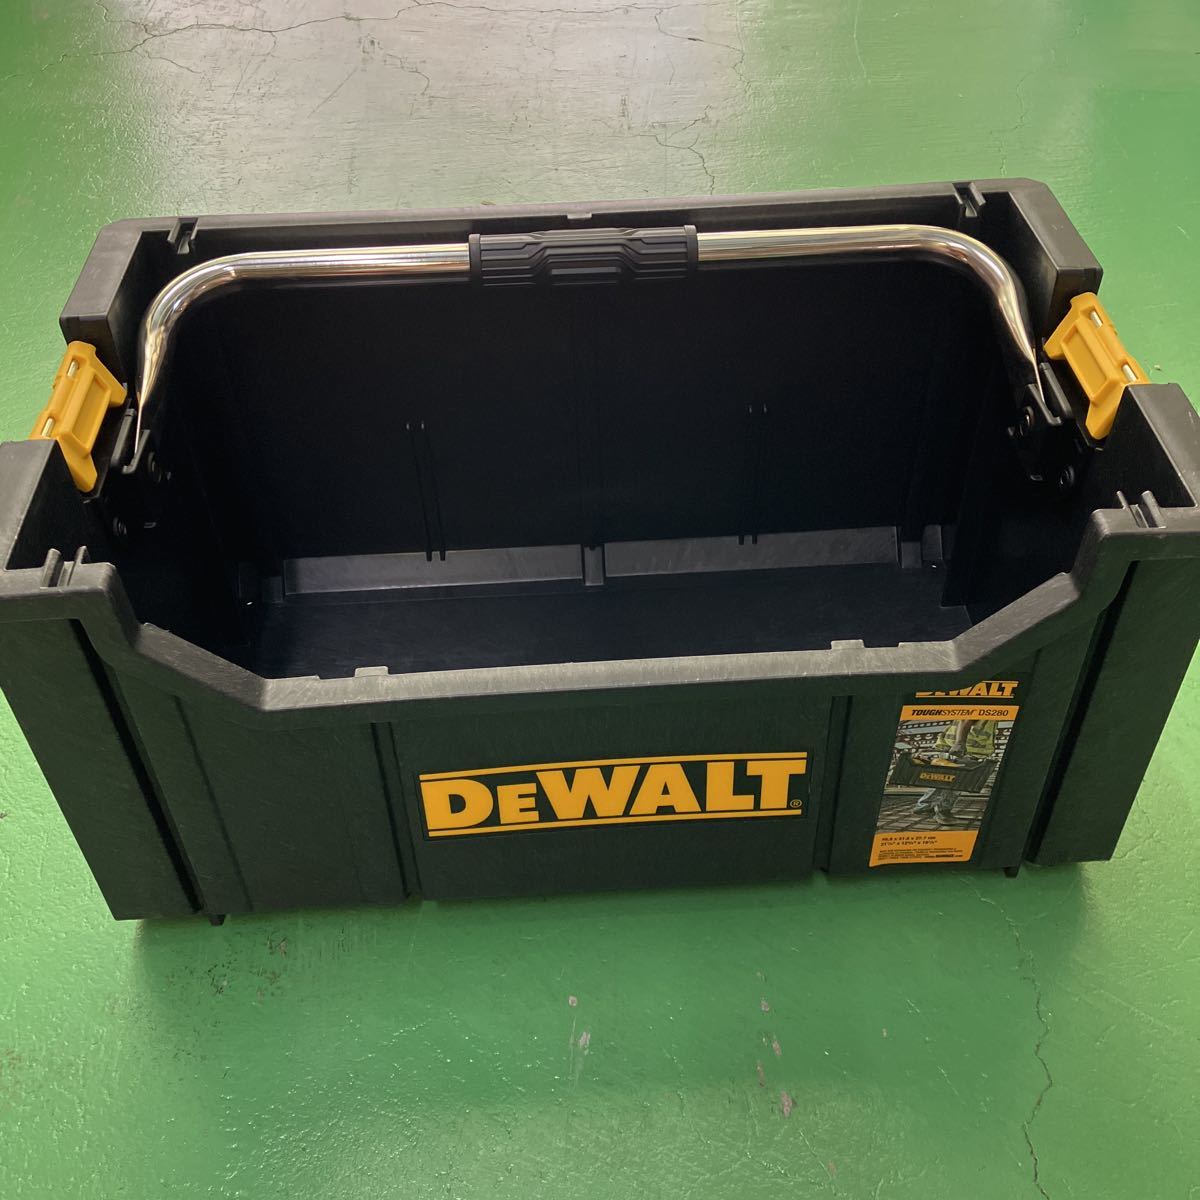 0510z0610 デウォルト(DeWALT) タフシステム システム収納BOX トートタイプ 工具箱 収納ケース ツールボックス 持ち運びやすい 同梱不可